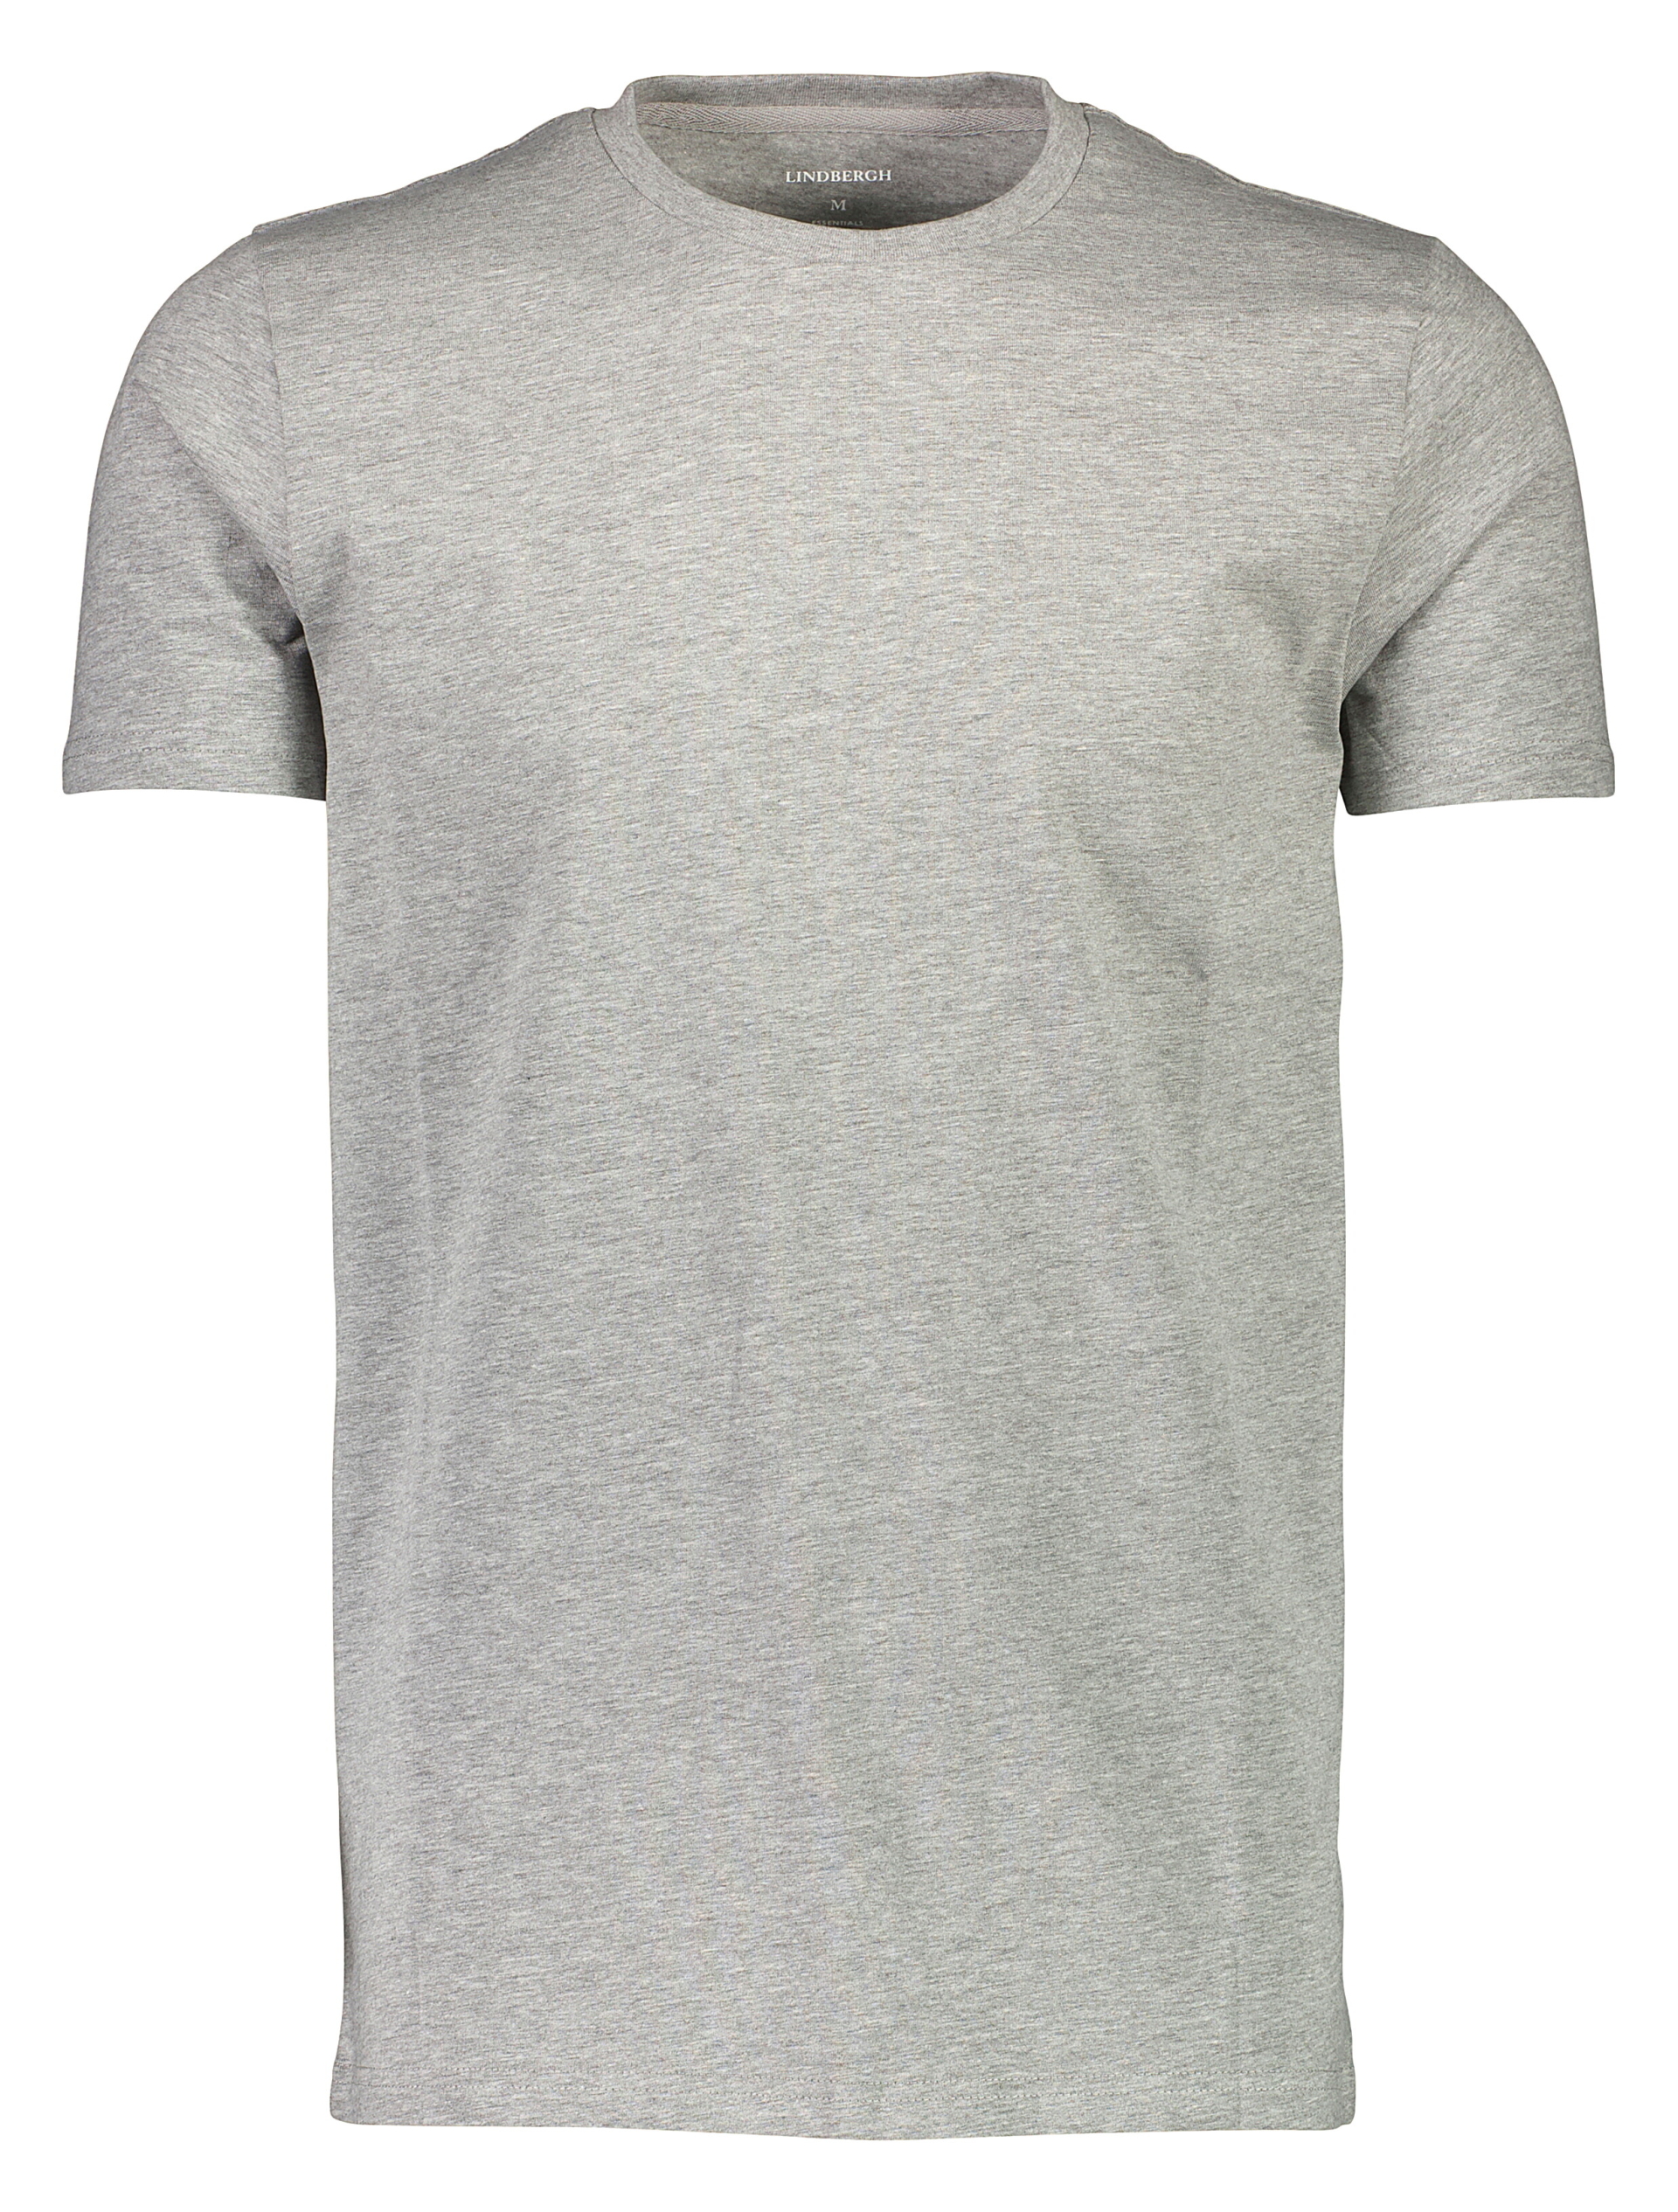 Lindbergh T-Shirt grau / grey mel